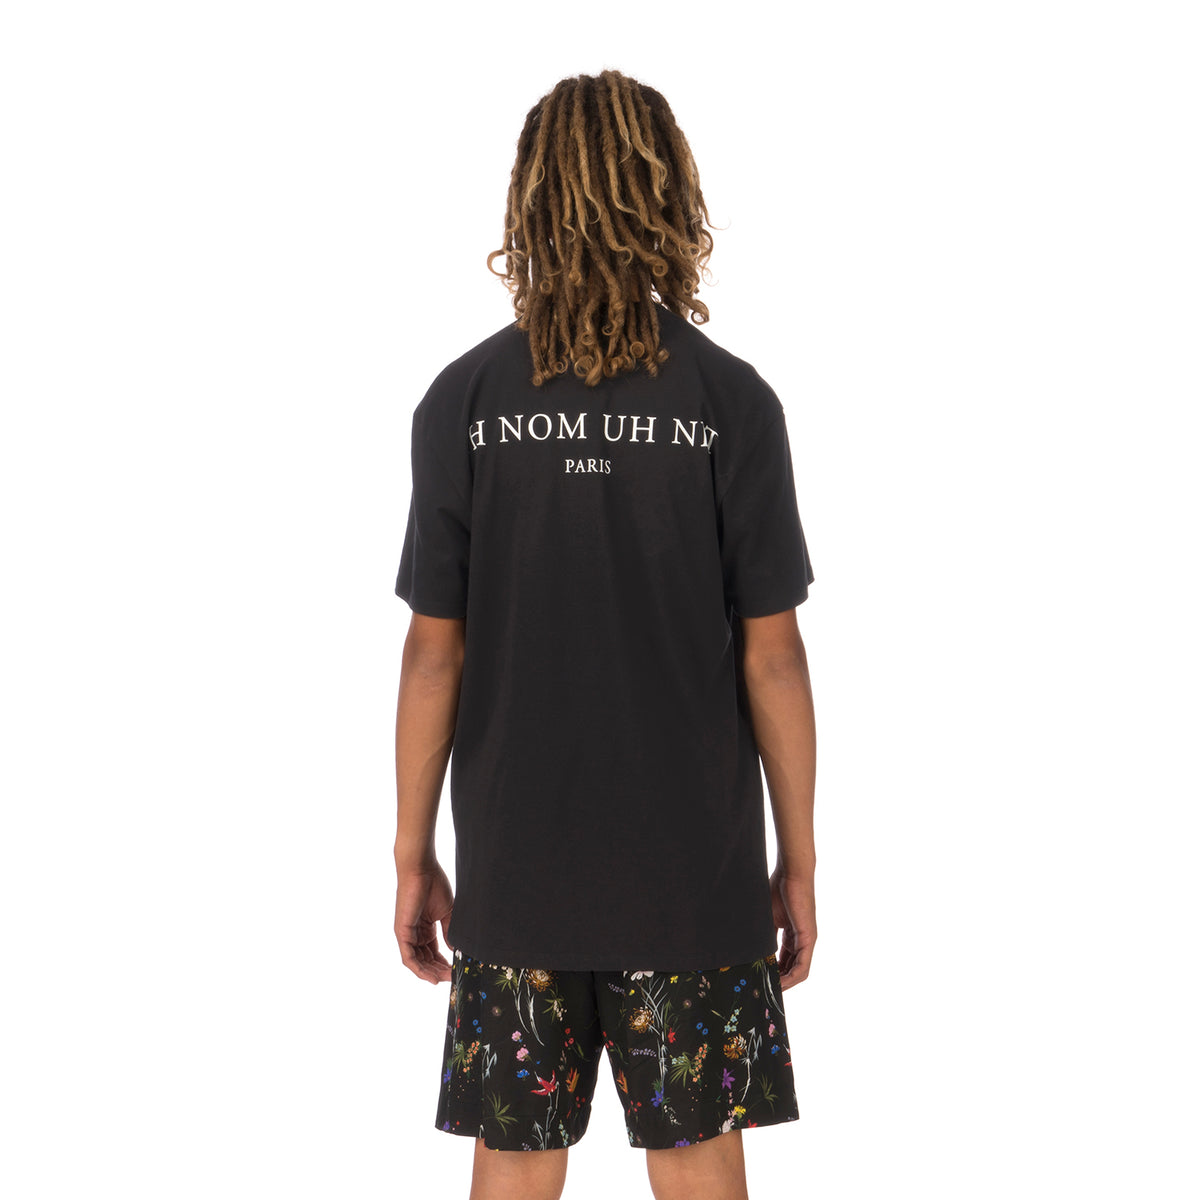 IH NOM UH NIT | Hendrix Bowl T-Shirt Black - Concrete